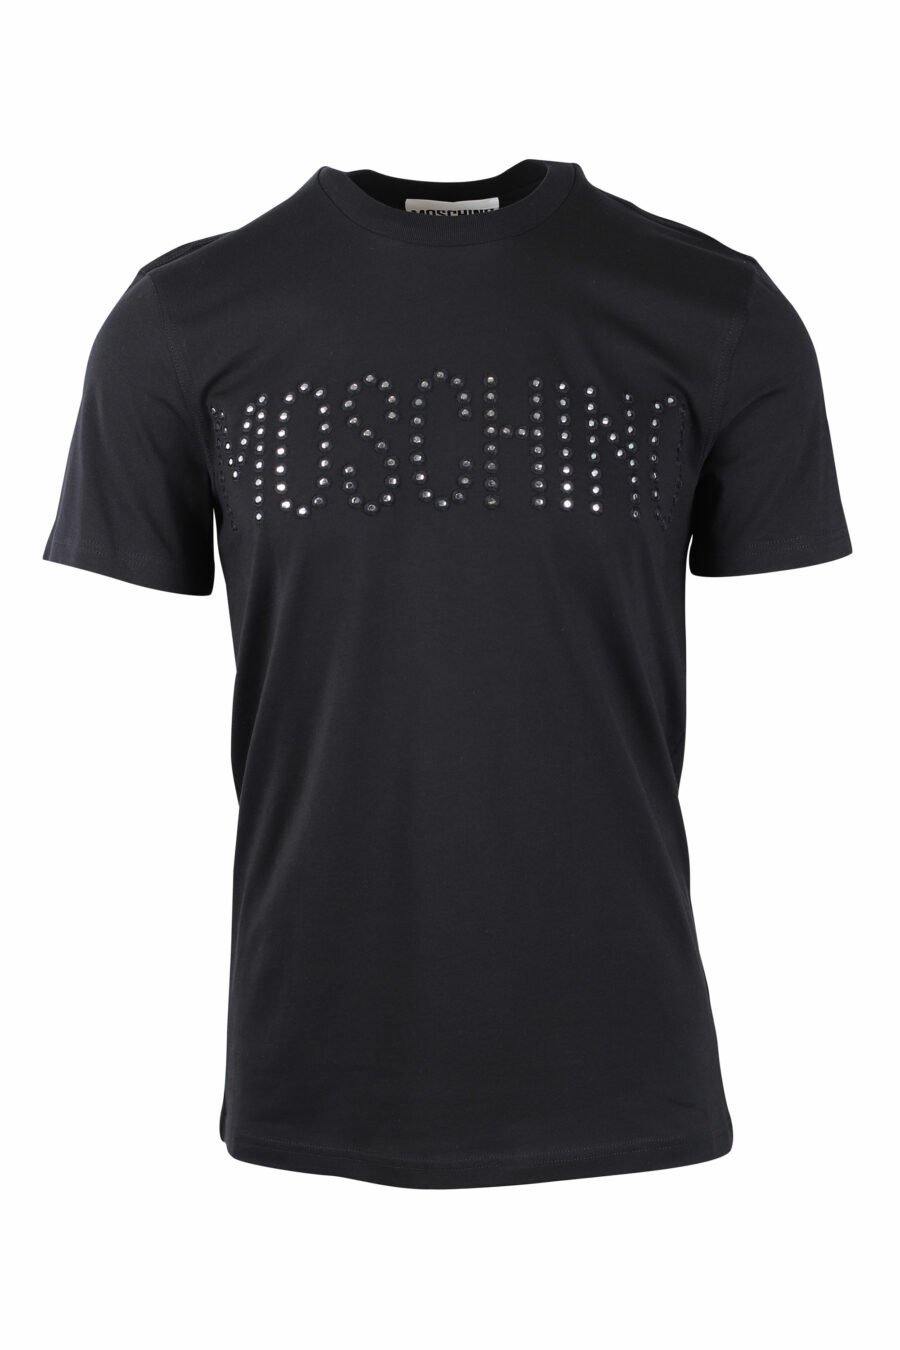 T-shirt noir avec maxilogo argenté - IMG 1467